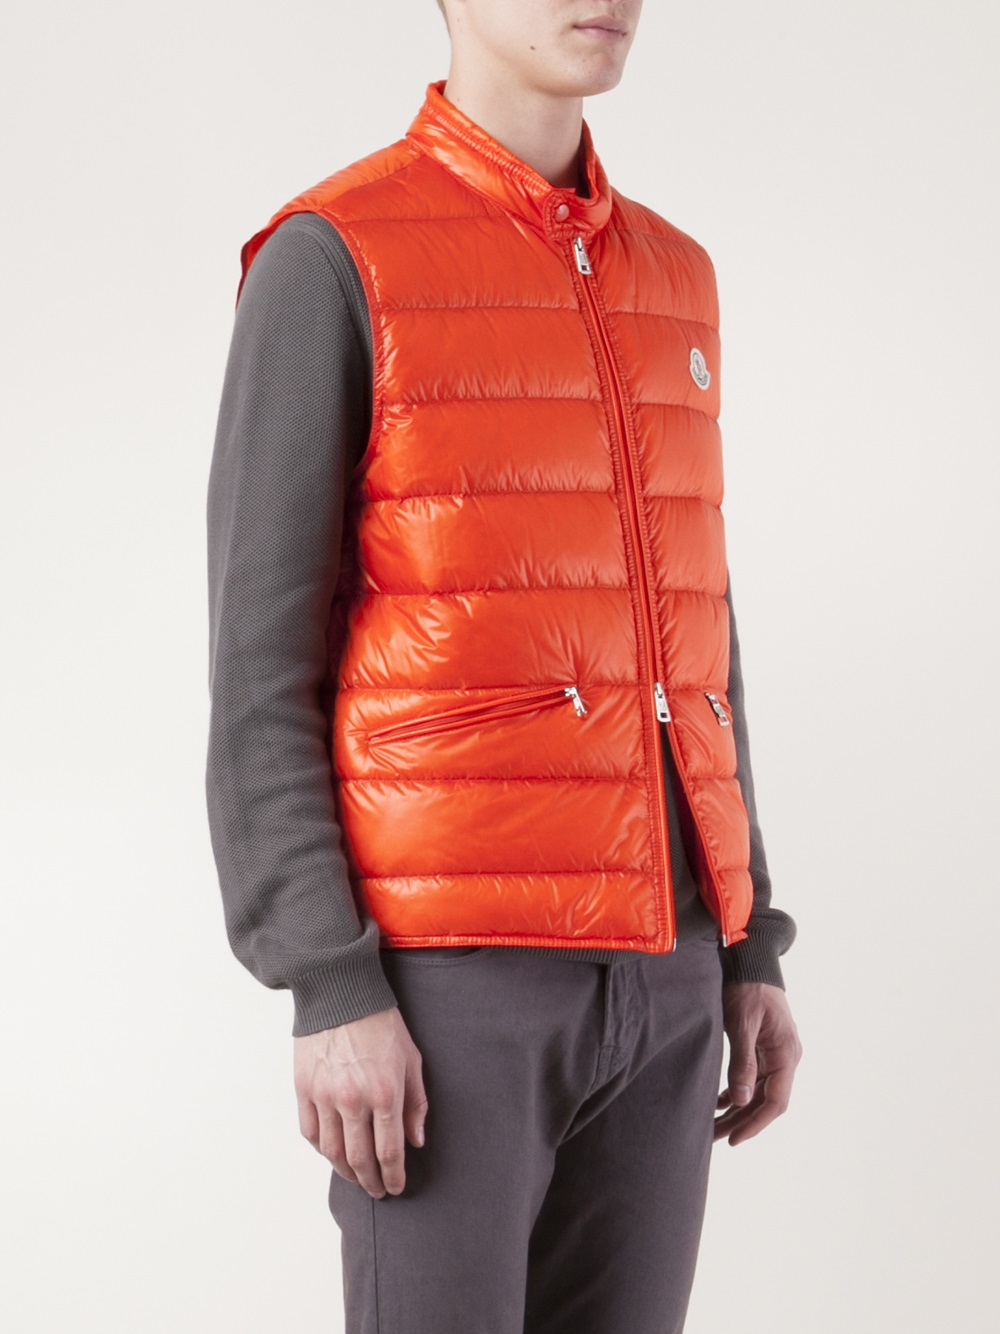 Moncler Puffer Vest in Yellow & Orange (Orange) for Men - Lyst